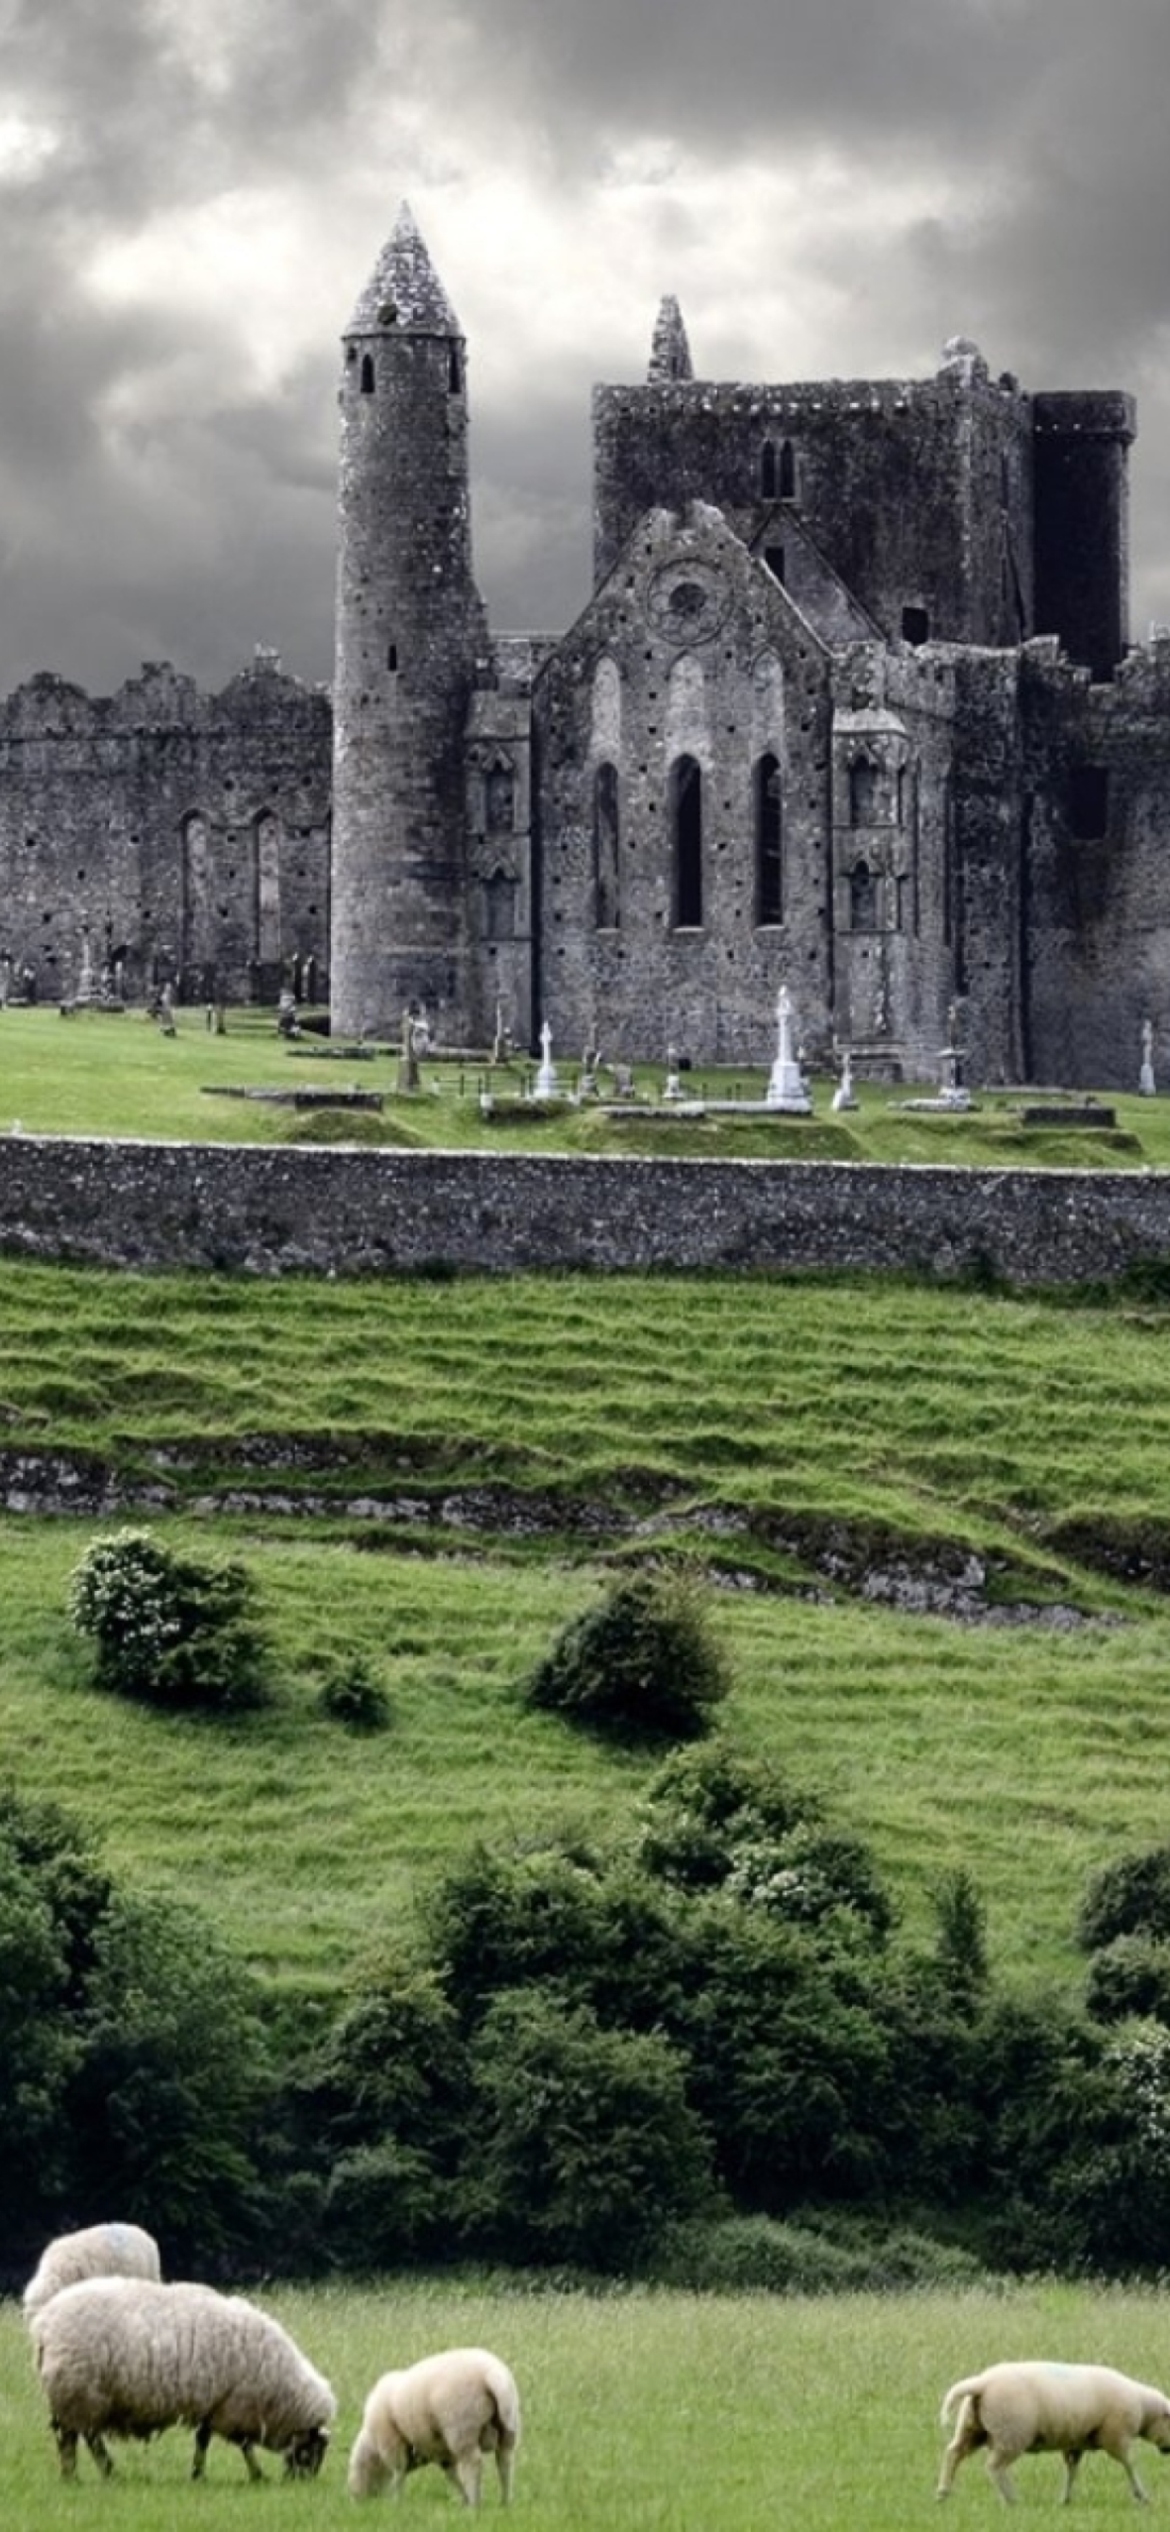 Sfondi Ireland Landscape With Sheep And Castle 1170x2532